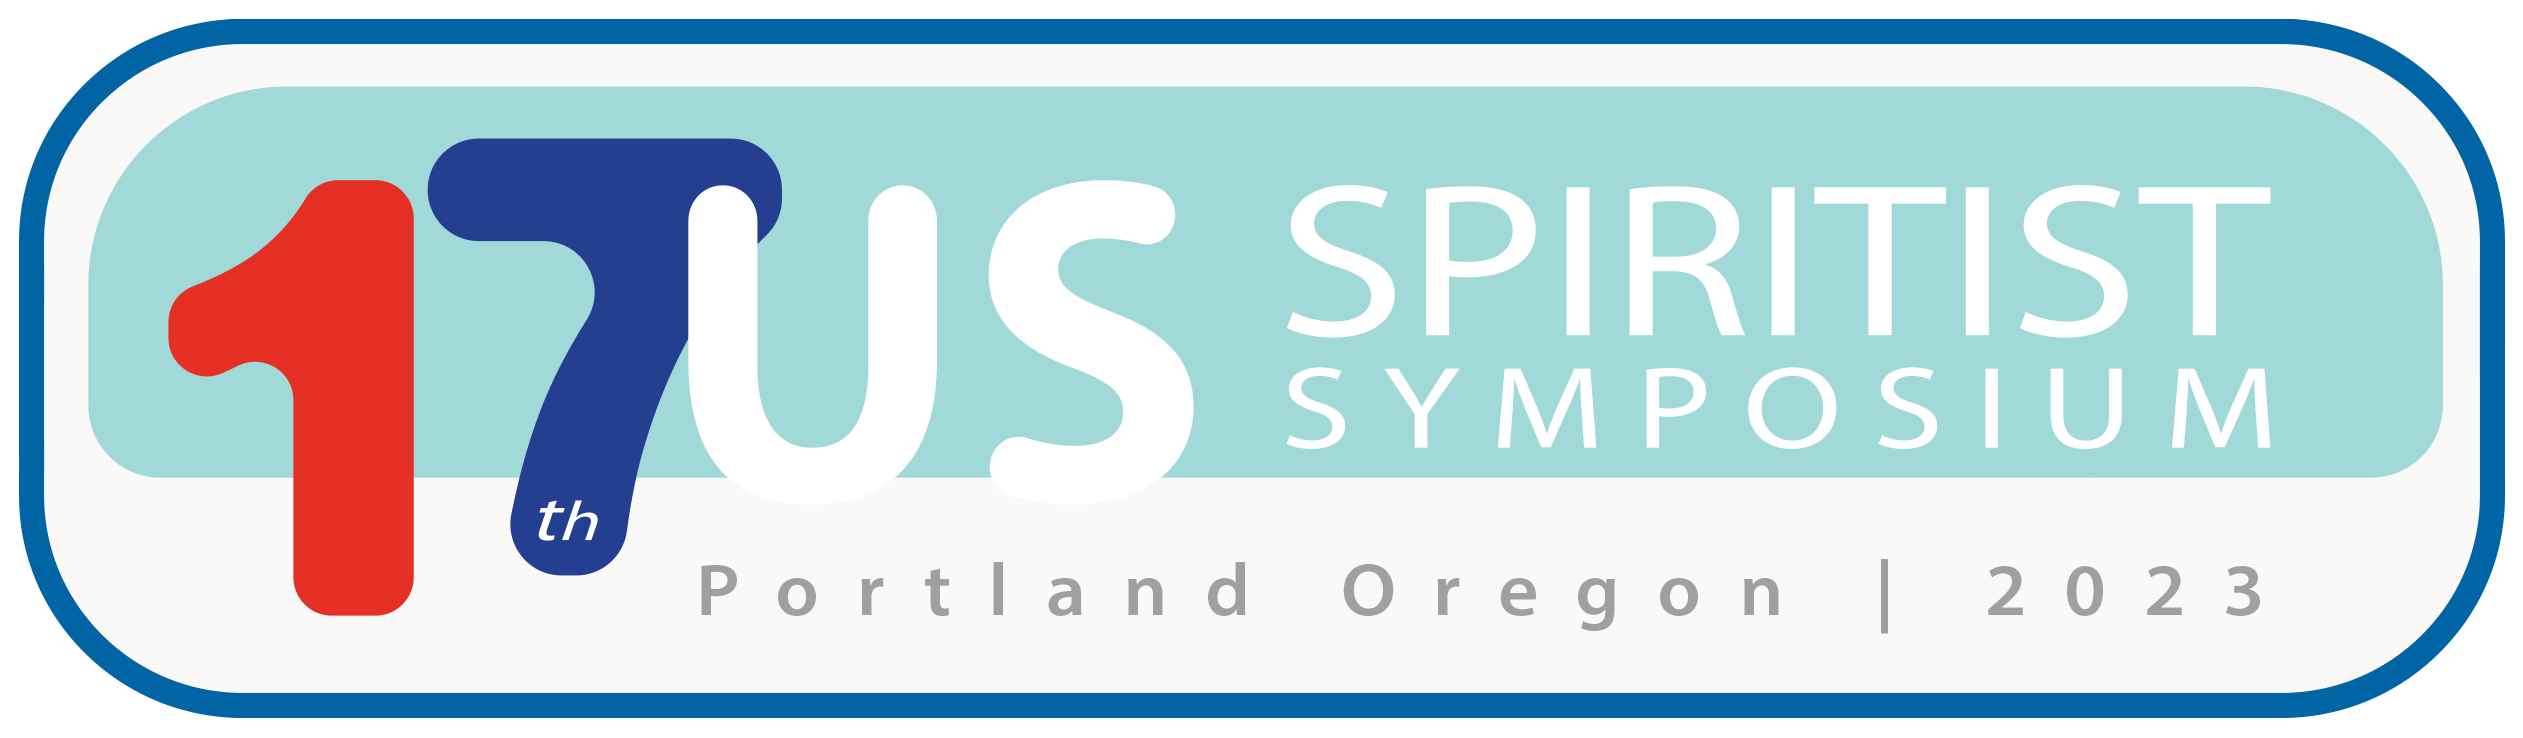 U.S. Spiritist Symposium